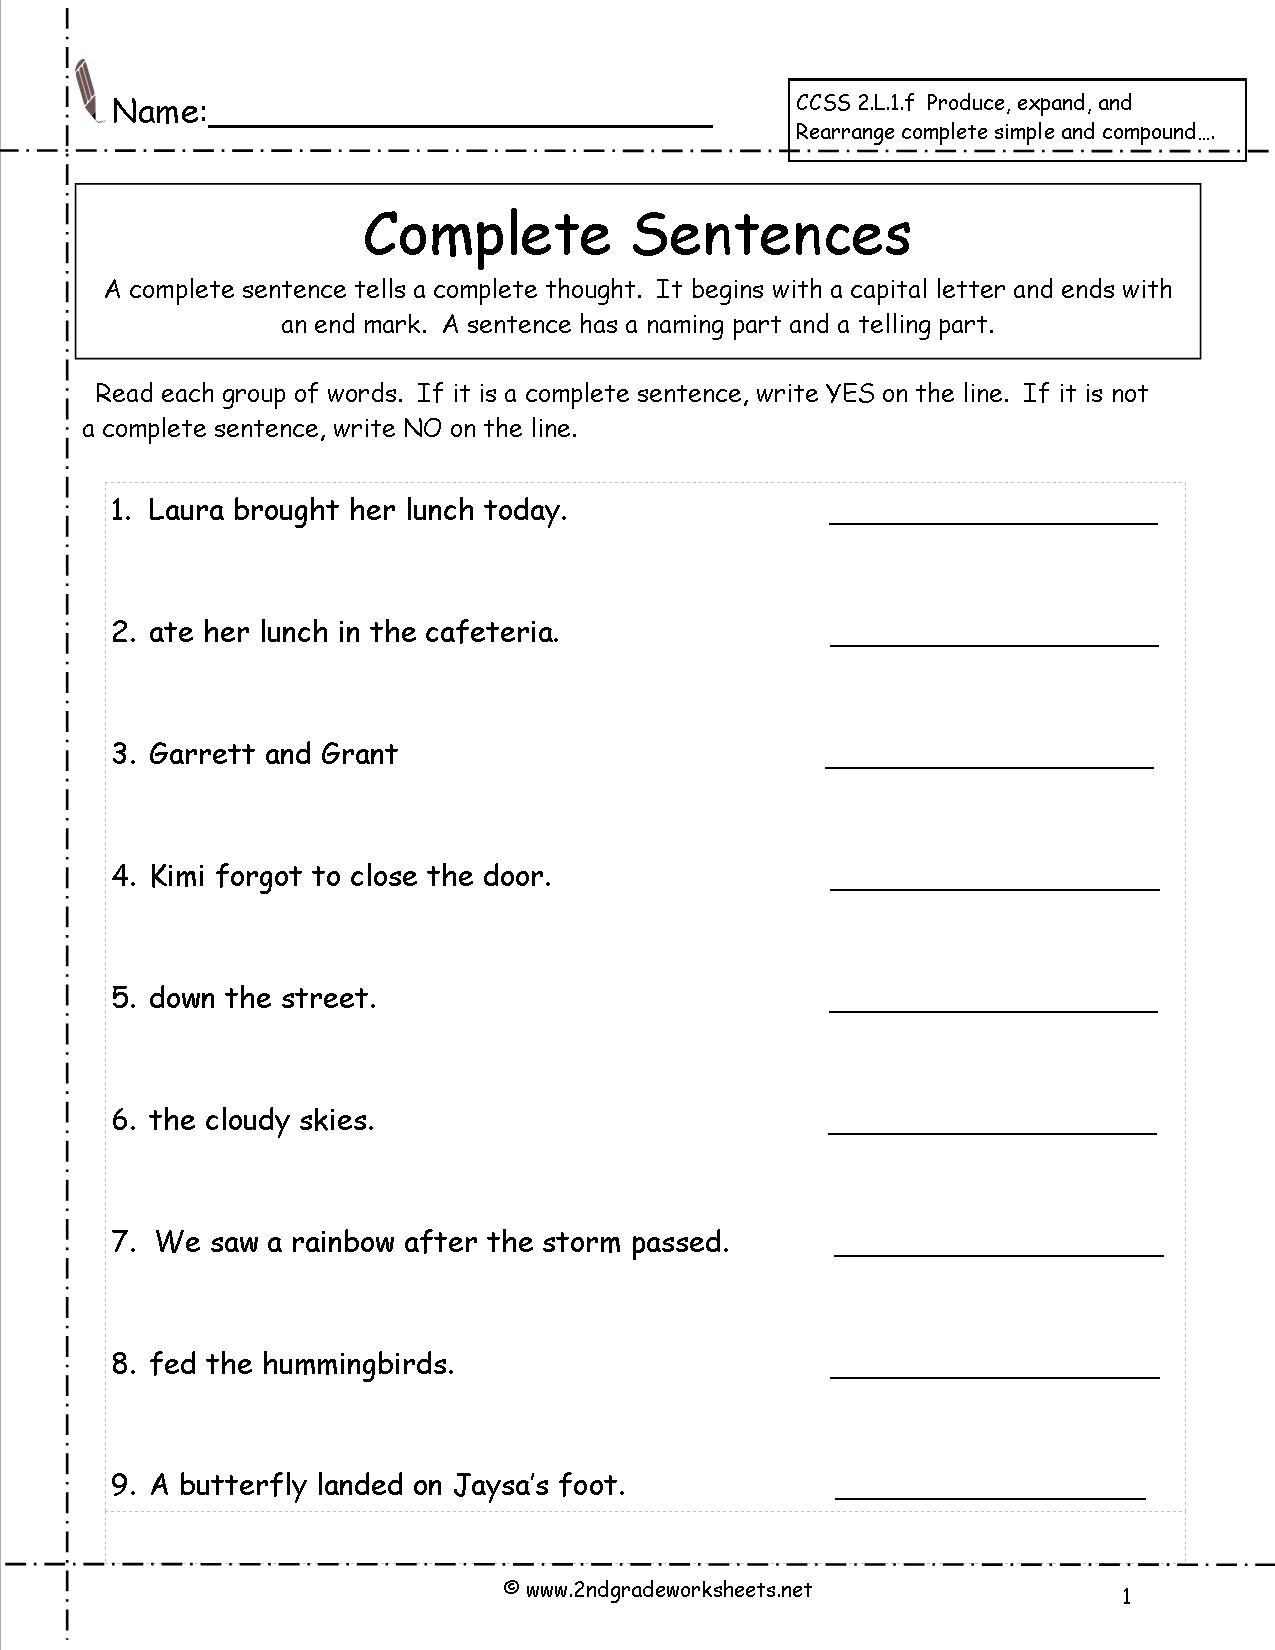 12 Best Images Of Correct The Sentence Word Order Worksheets Compound Sentences Worksheets 2nd